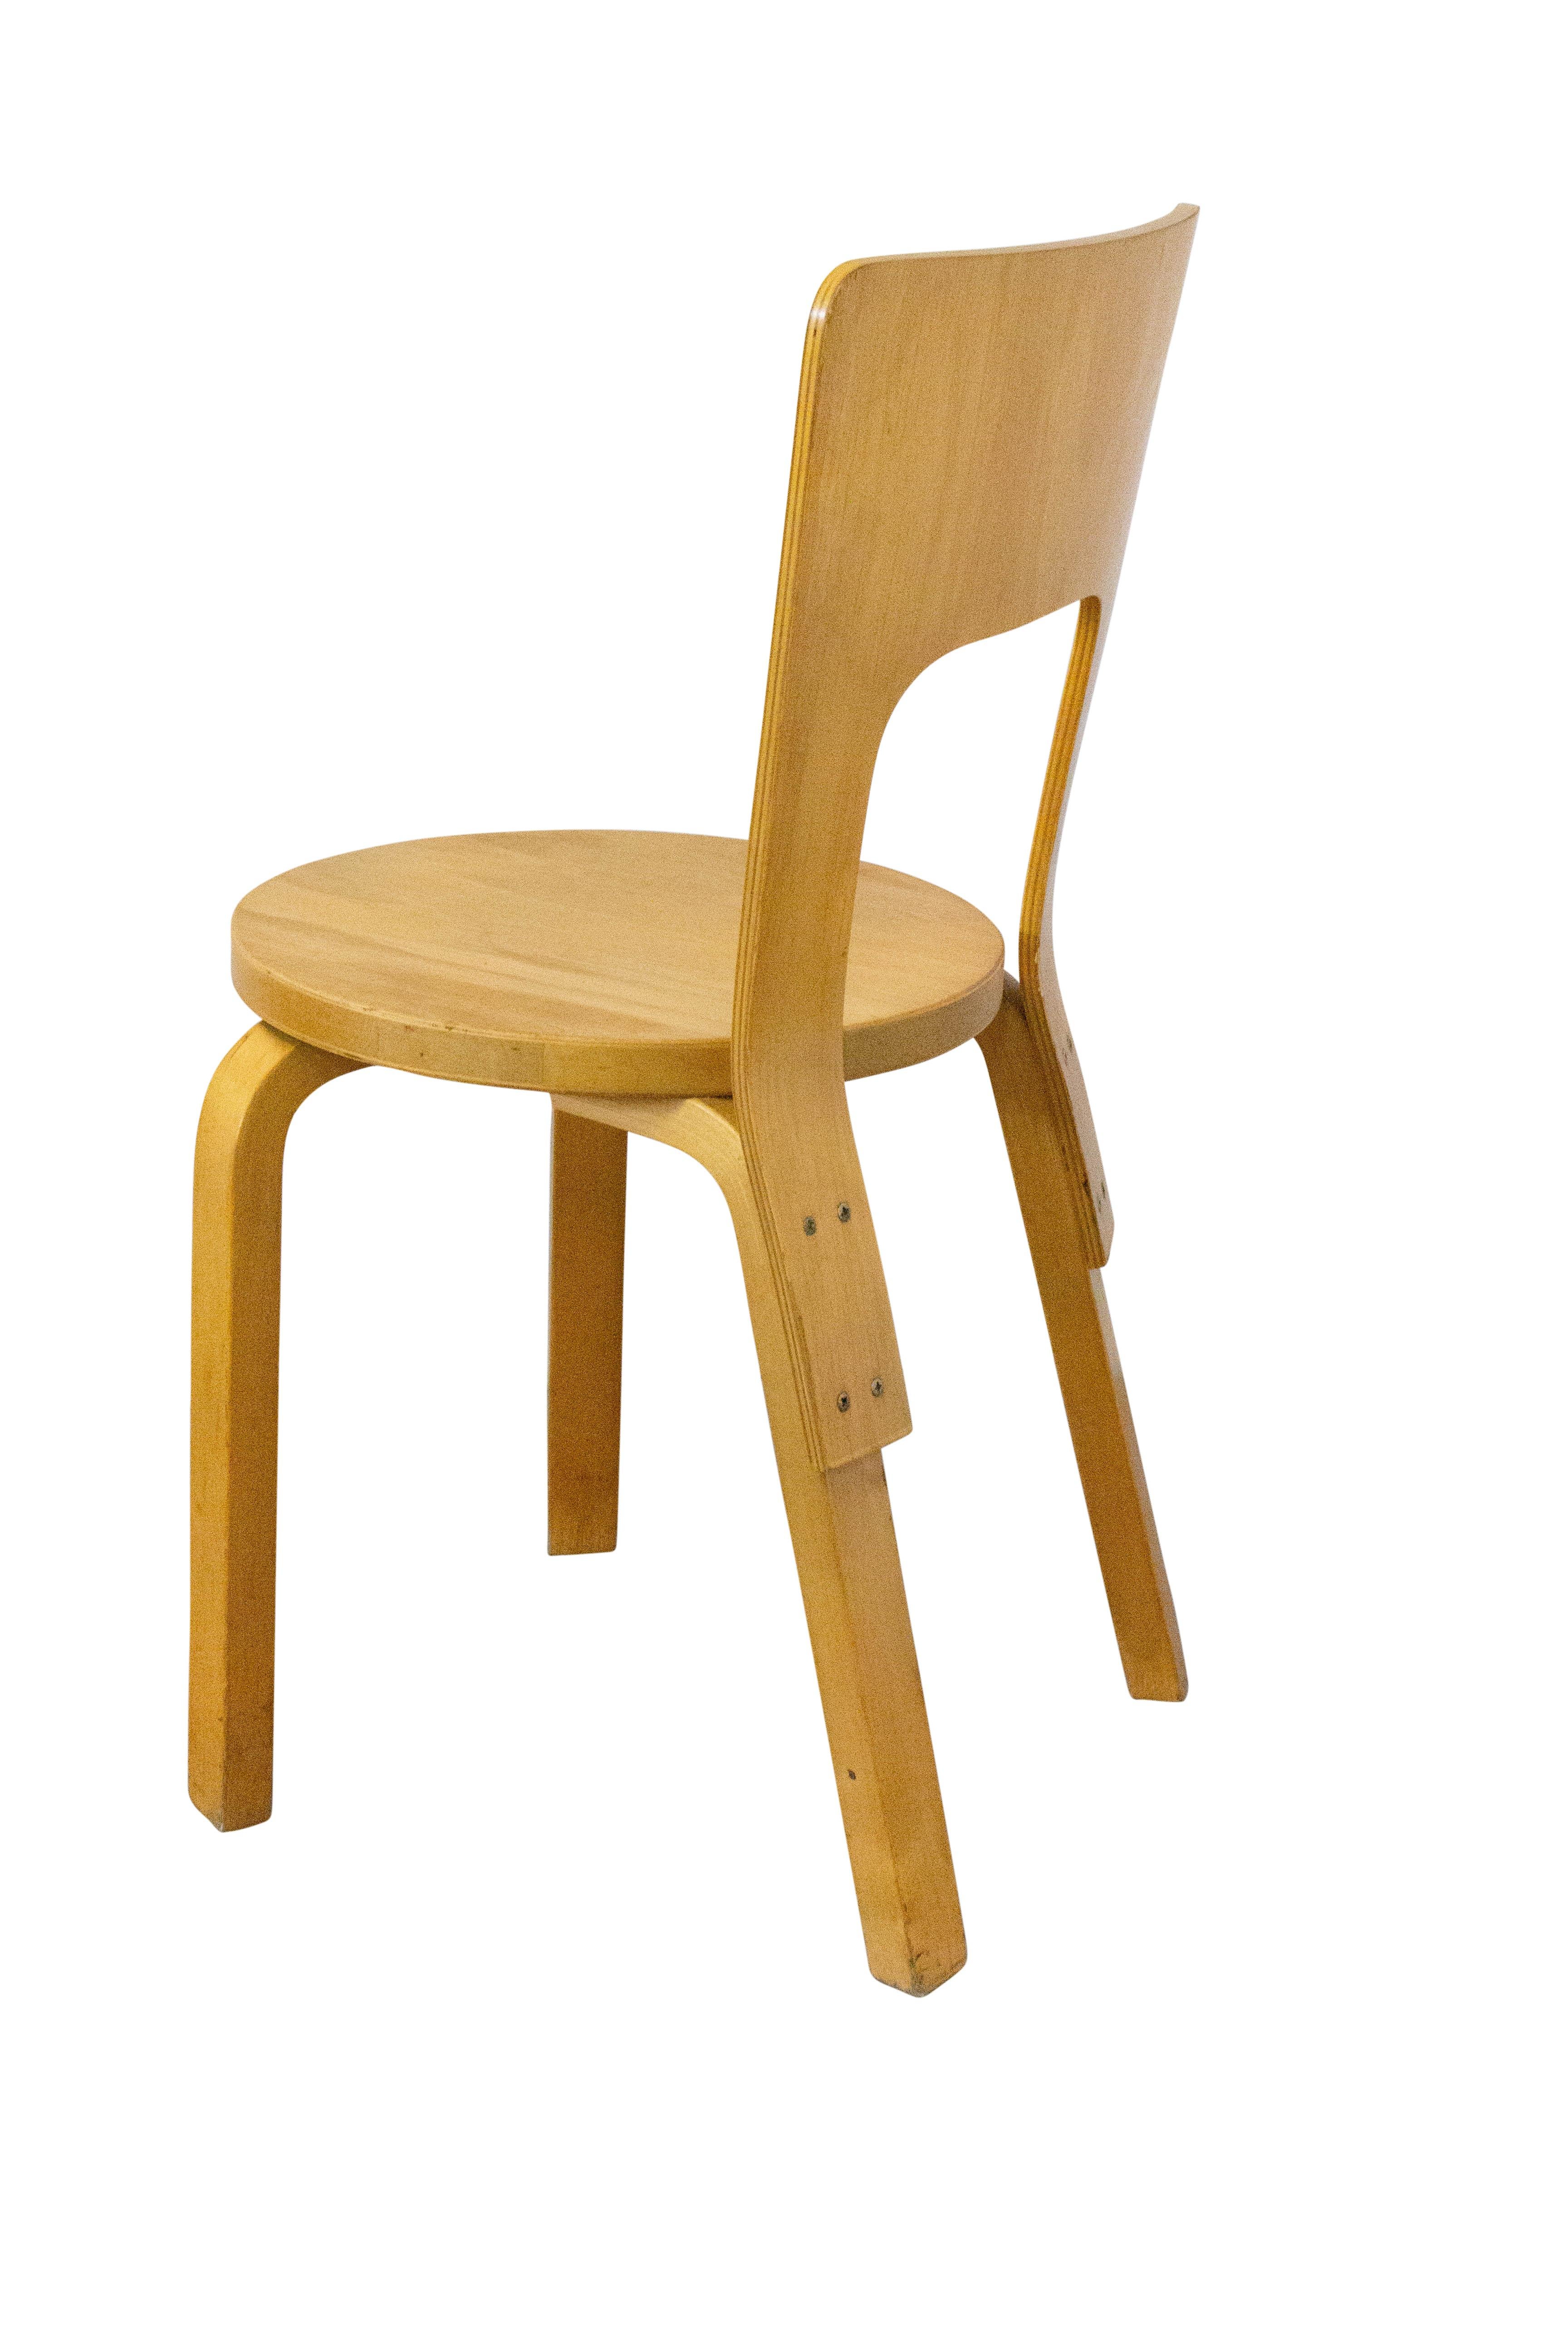 20th Century Finnish Vintage Wood Chair Alvar Aalto Model 66, circa 1930 For Sale